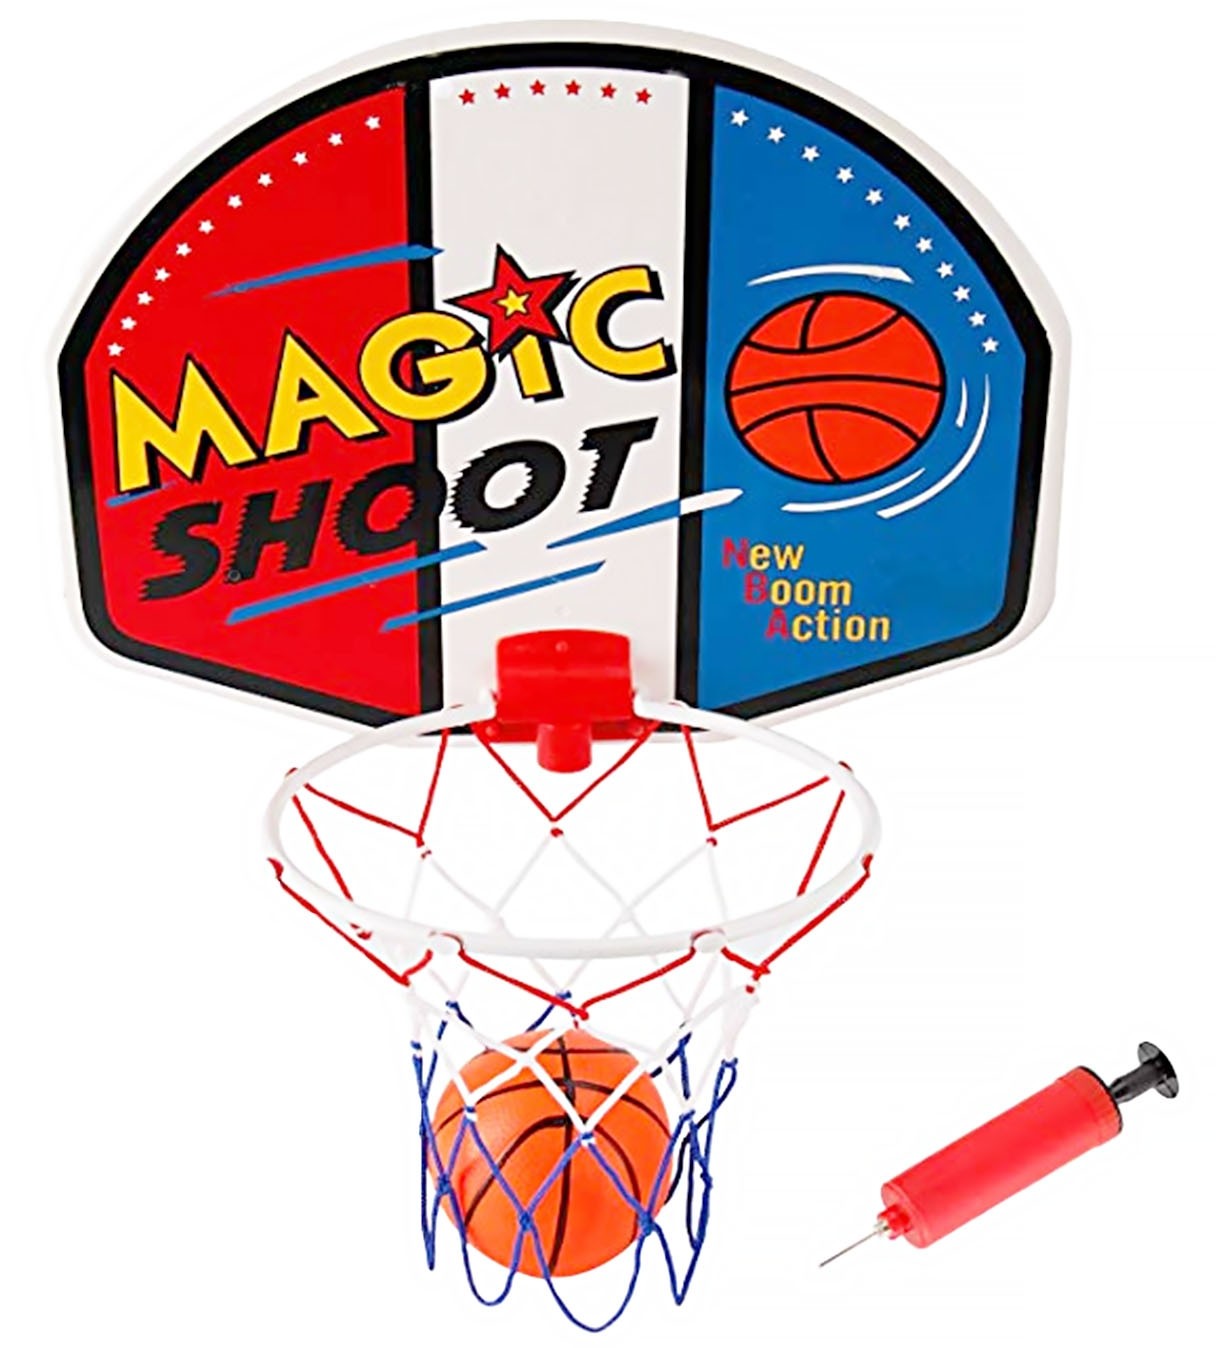 Magic Shot Mini Basketball Hoop Set With Ball And Pump